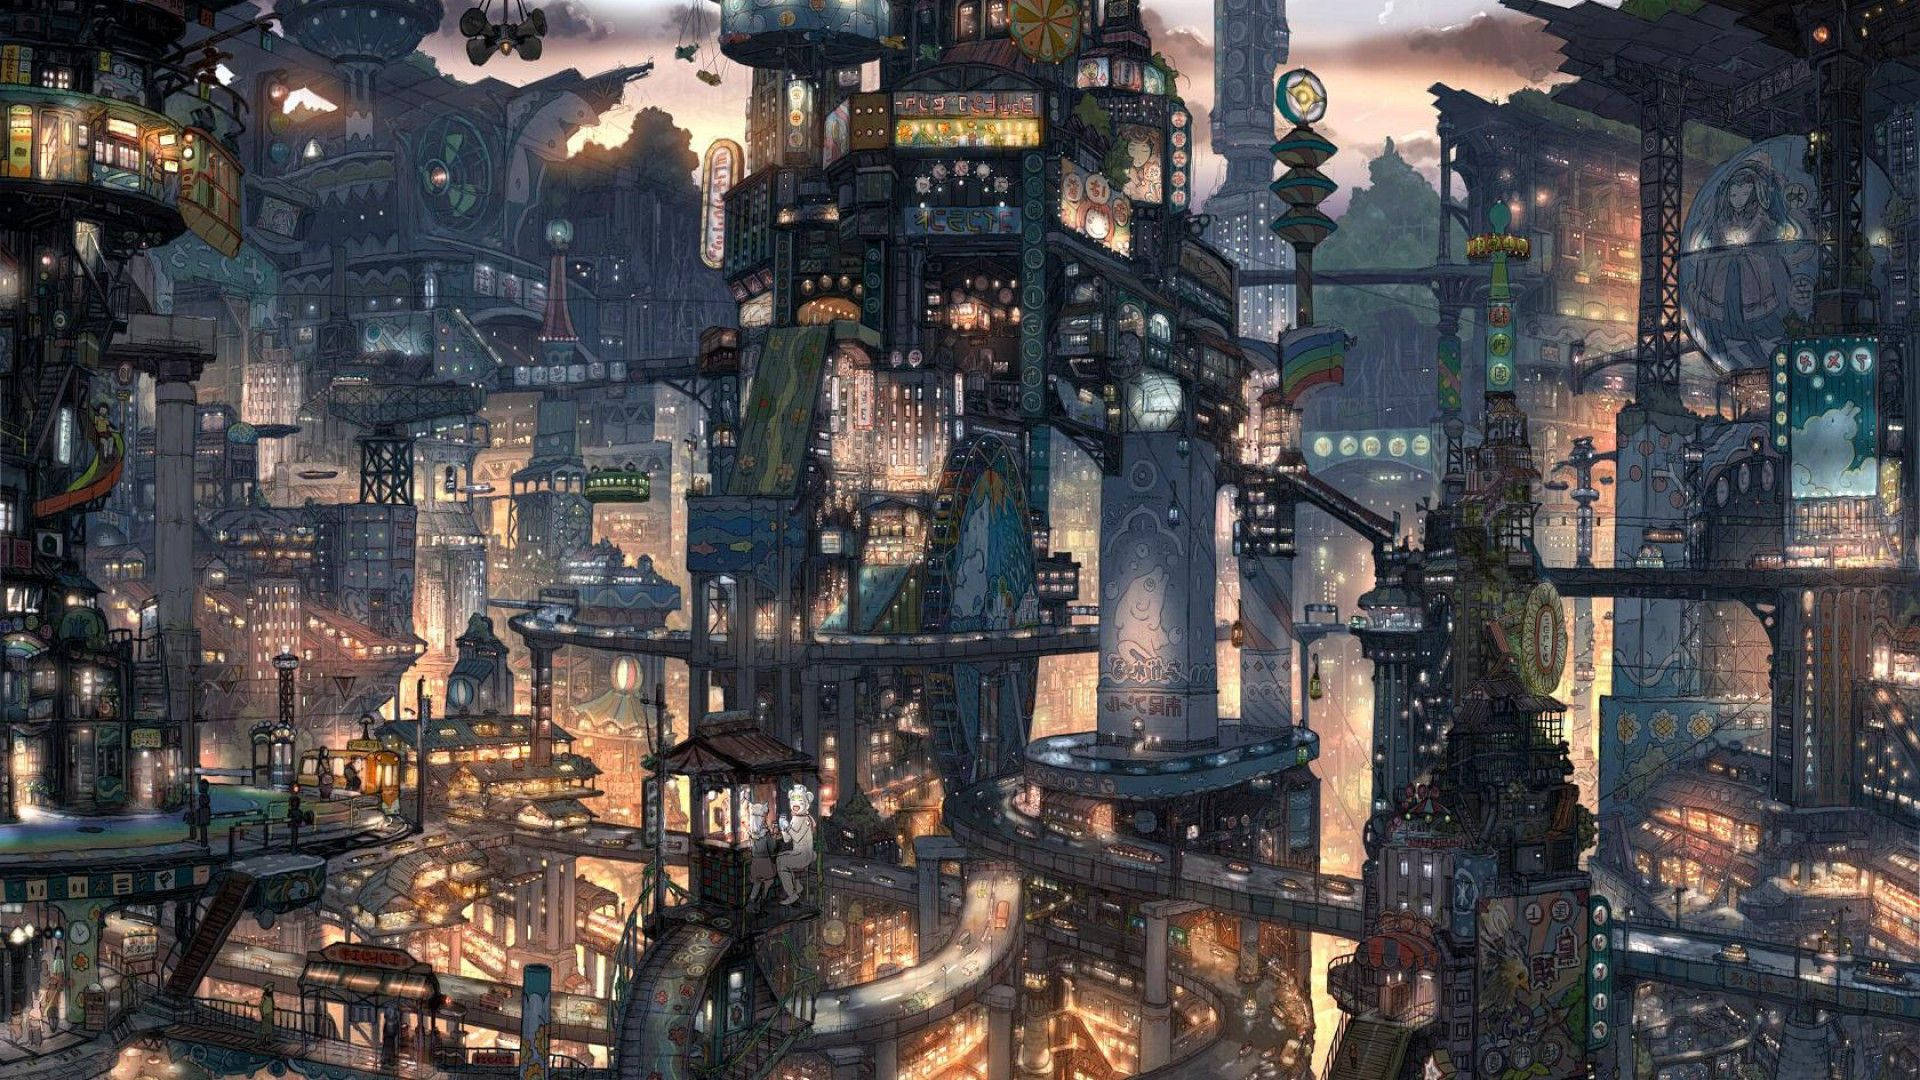 City in the sky wallpaper - Digital Art wallpapers - #18941 - Anime city, alien